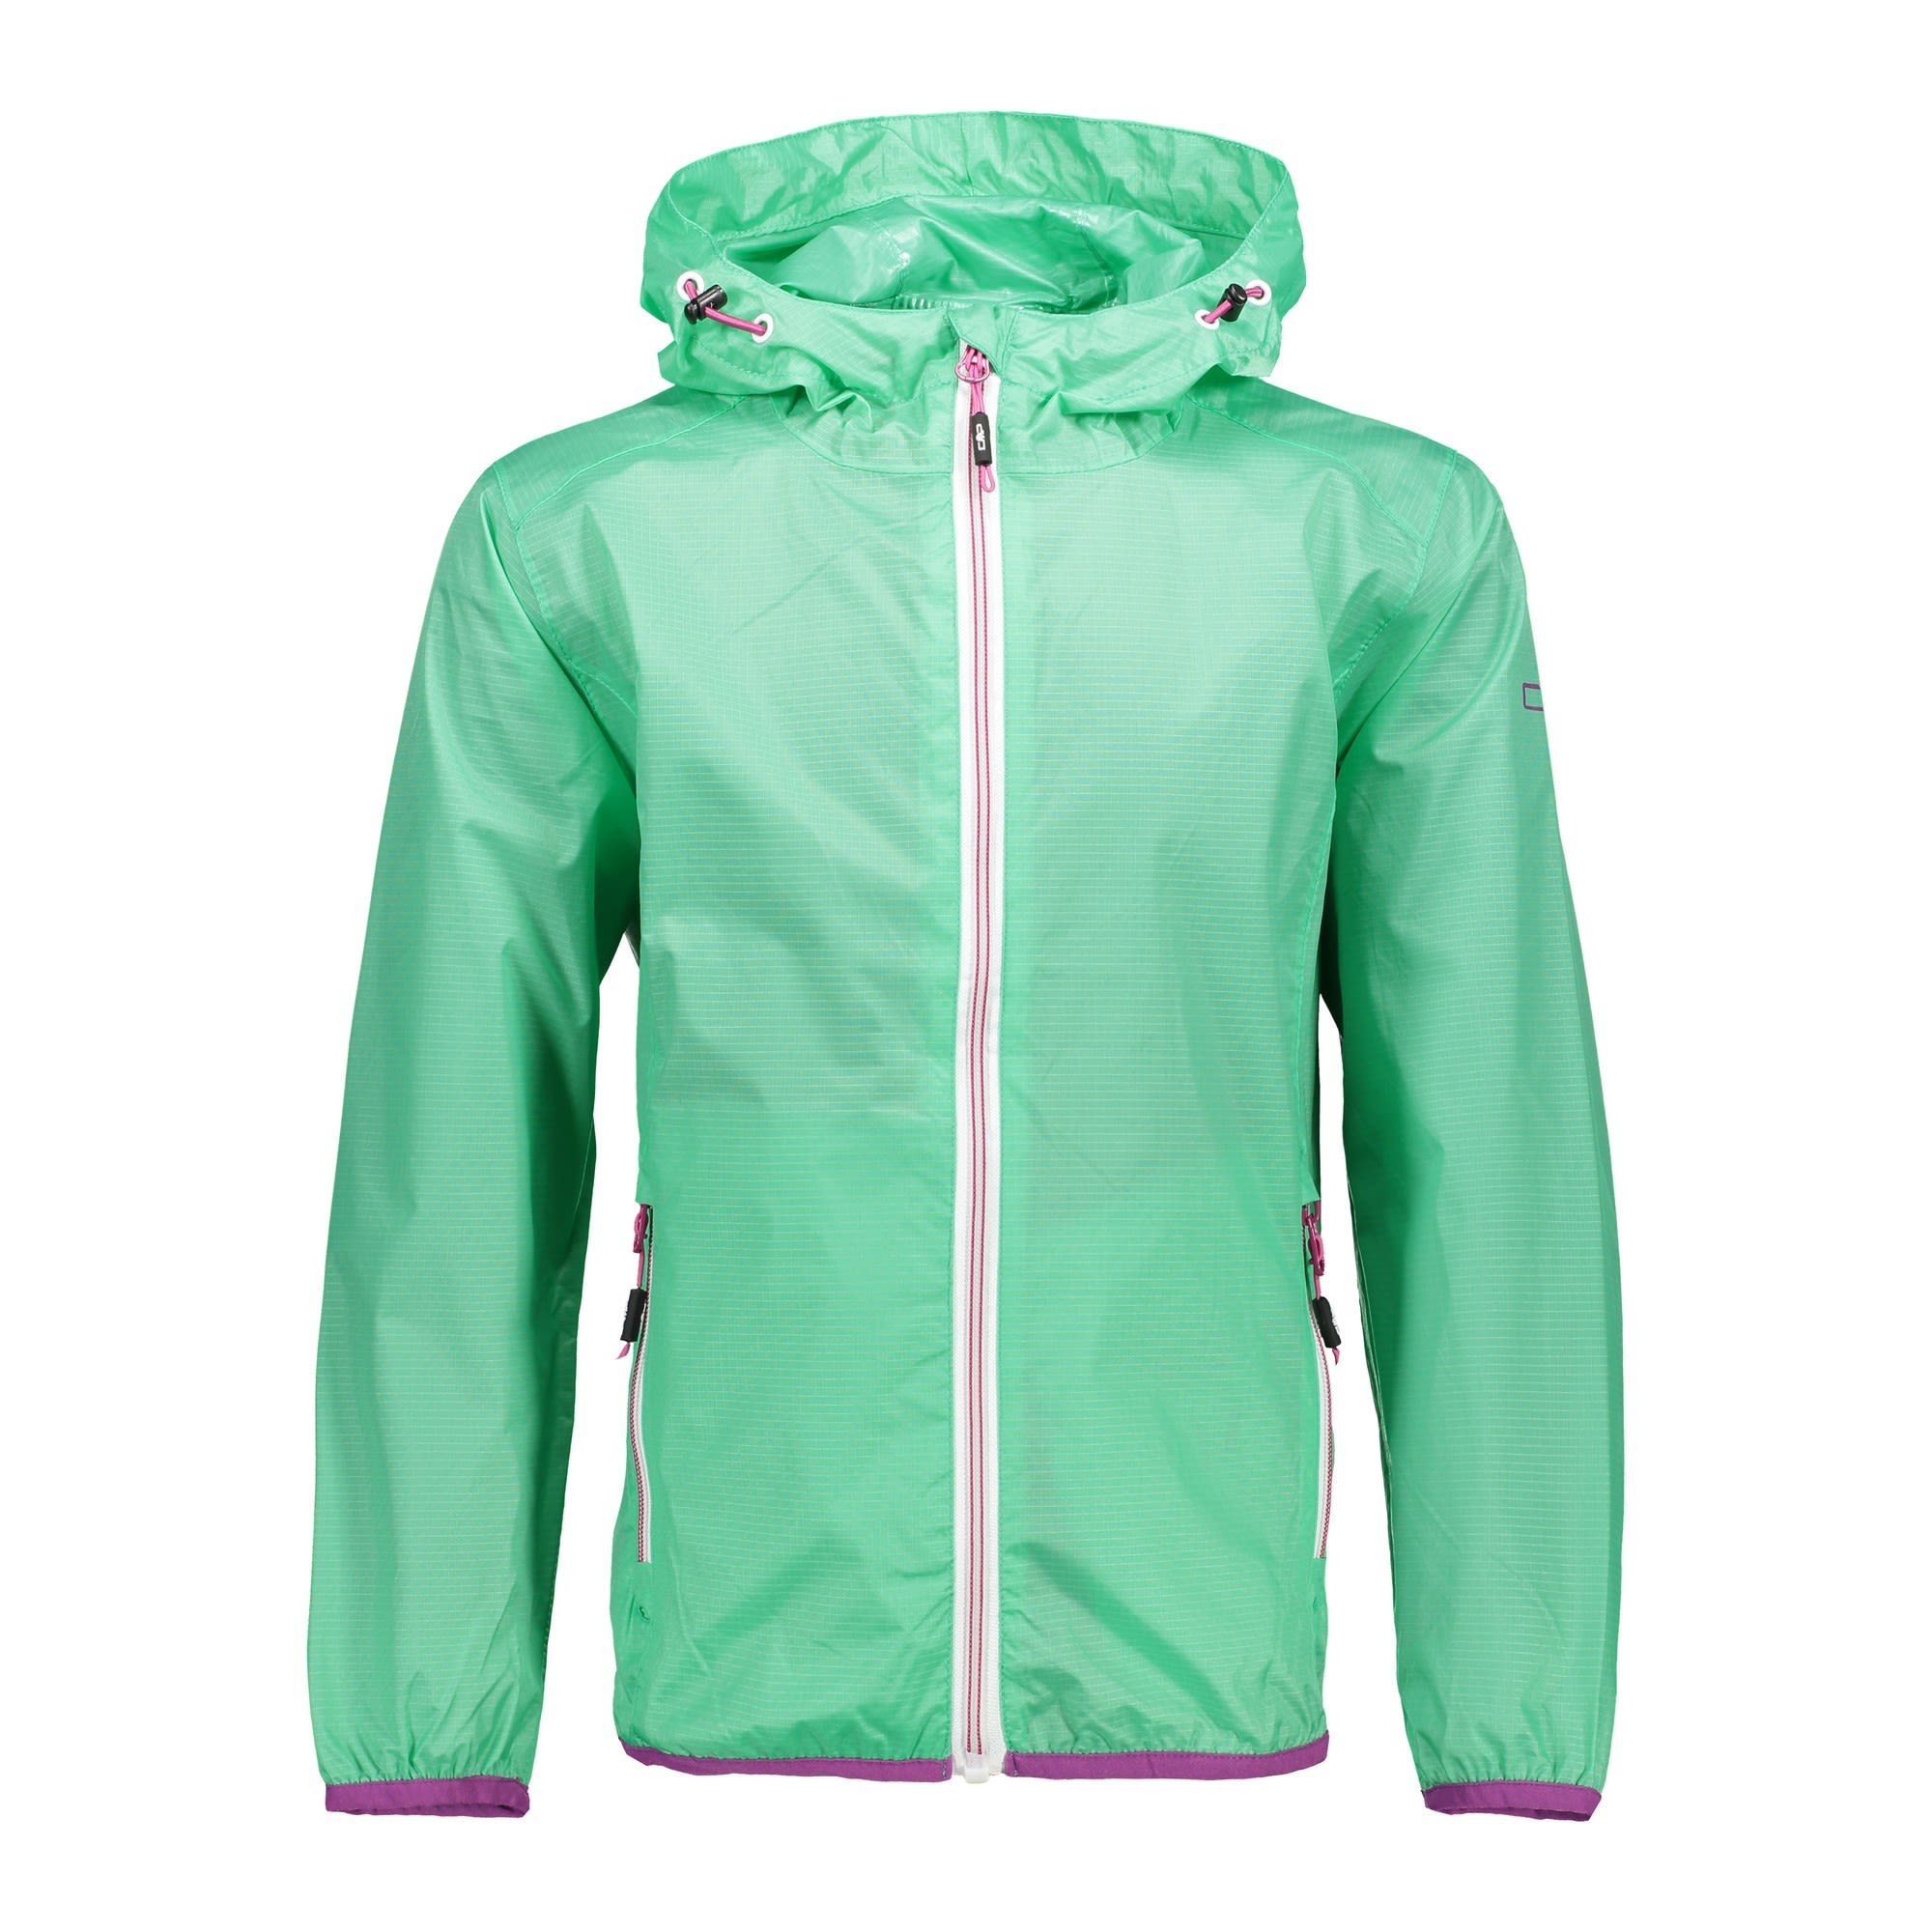 CMP Girl FIX Hood Jacket Ripstop Grn- Female Regenjacken und Hardshells- Grsse 104 - Farbe Green Tea unter CMP